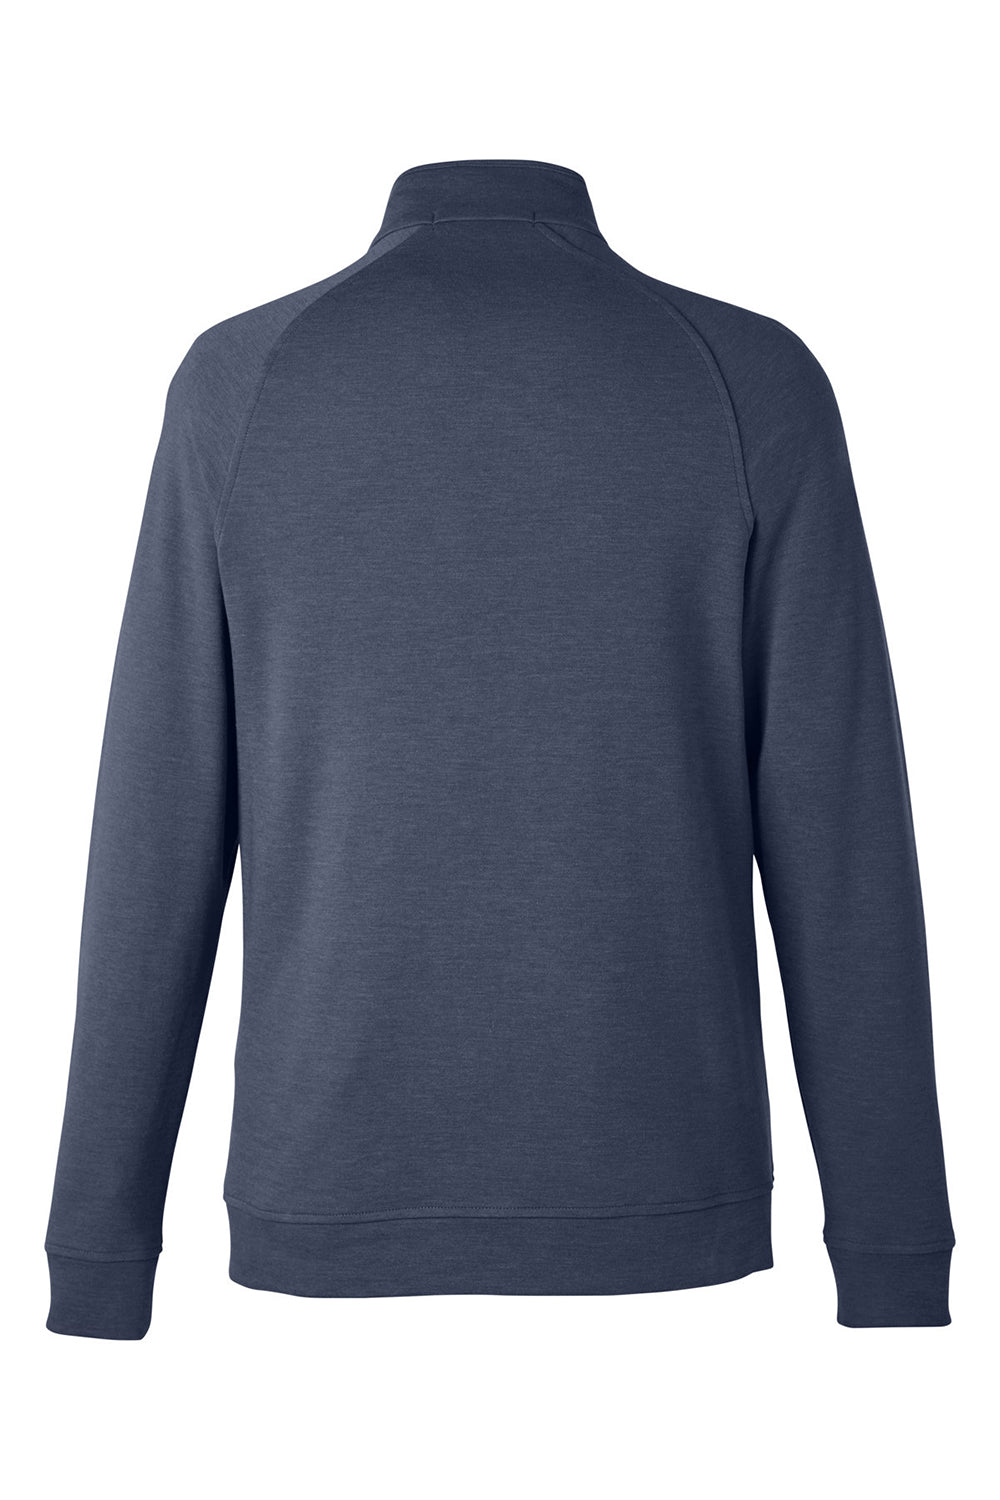 Devon & Jones DG481 Mens New Classics Charleston 1/4 Zip Sweatshirt Navy Blue Melange Flat Back